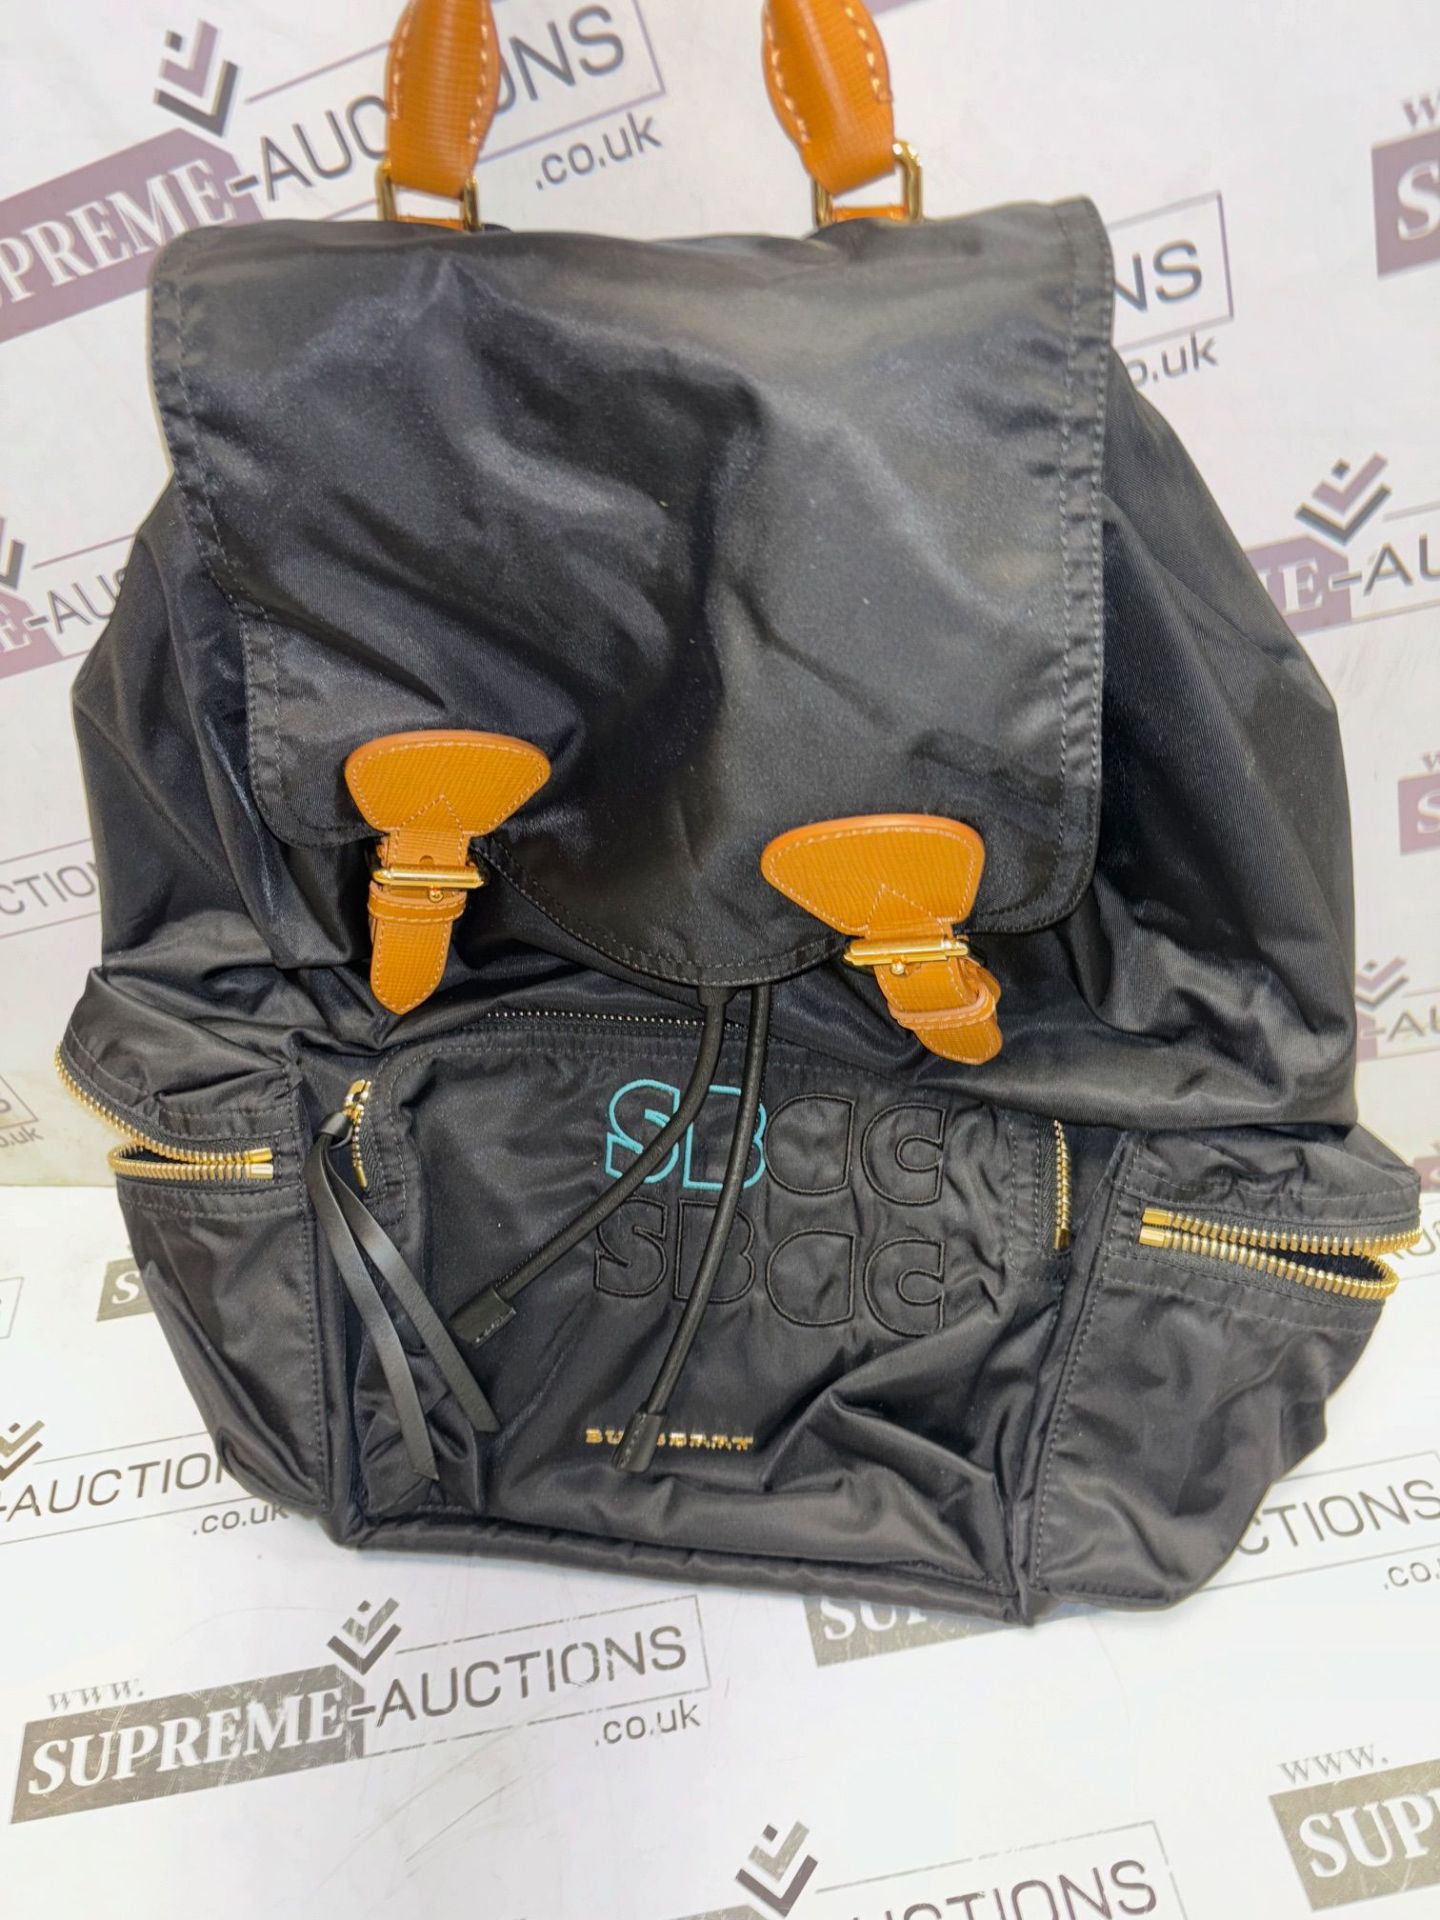 Genuine Burberry Nylon Medium Rucksack Backpack Black, personalised SBDC. Used for training. - Image 2 of 6